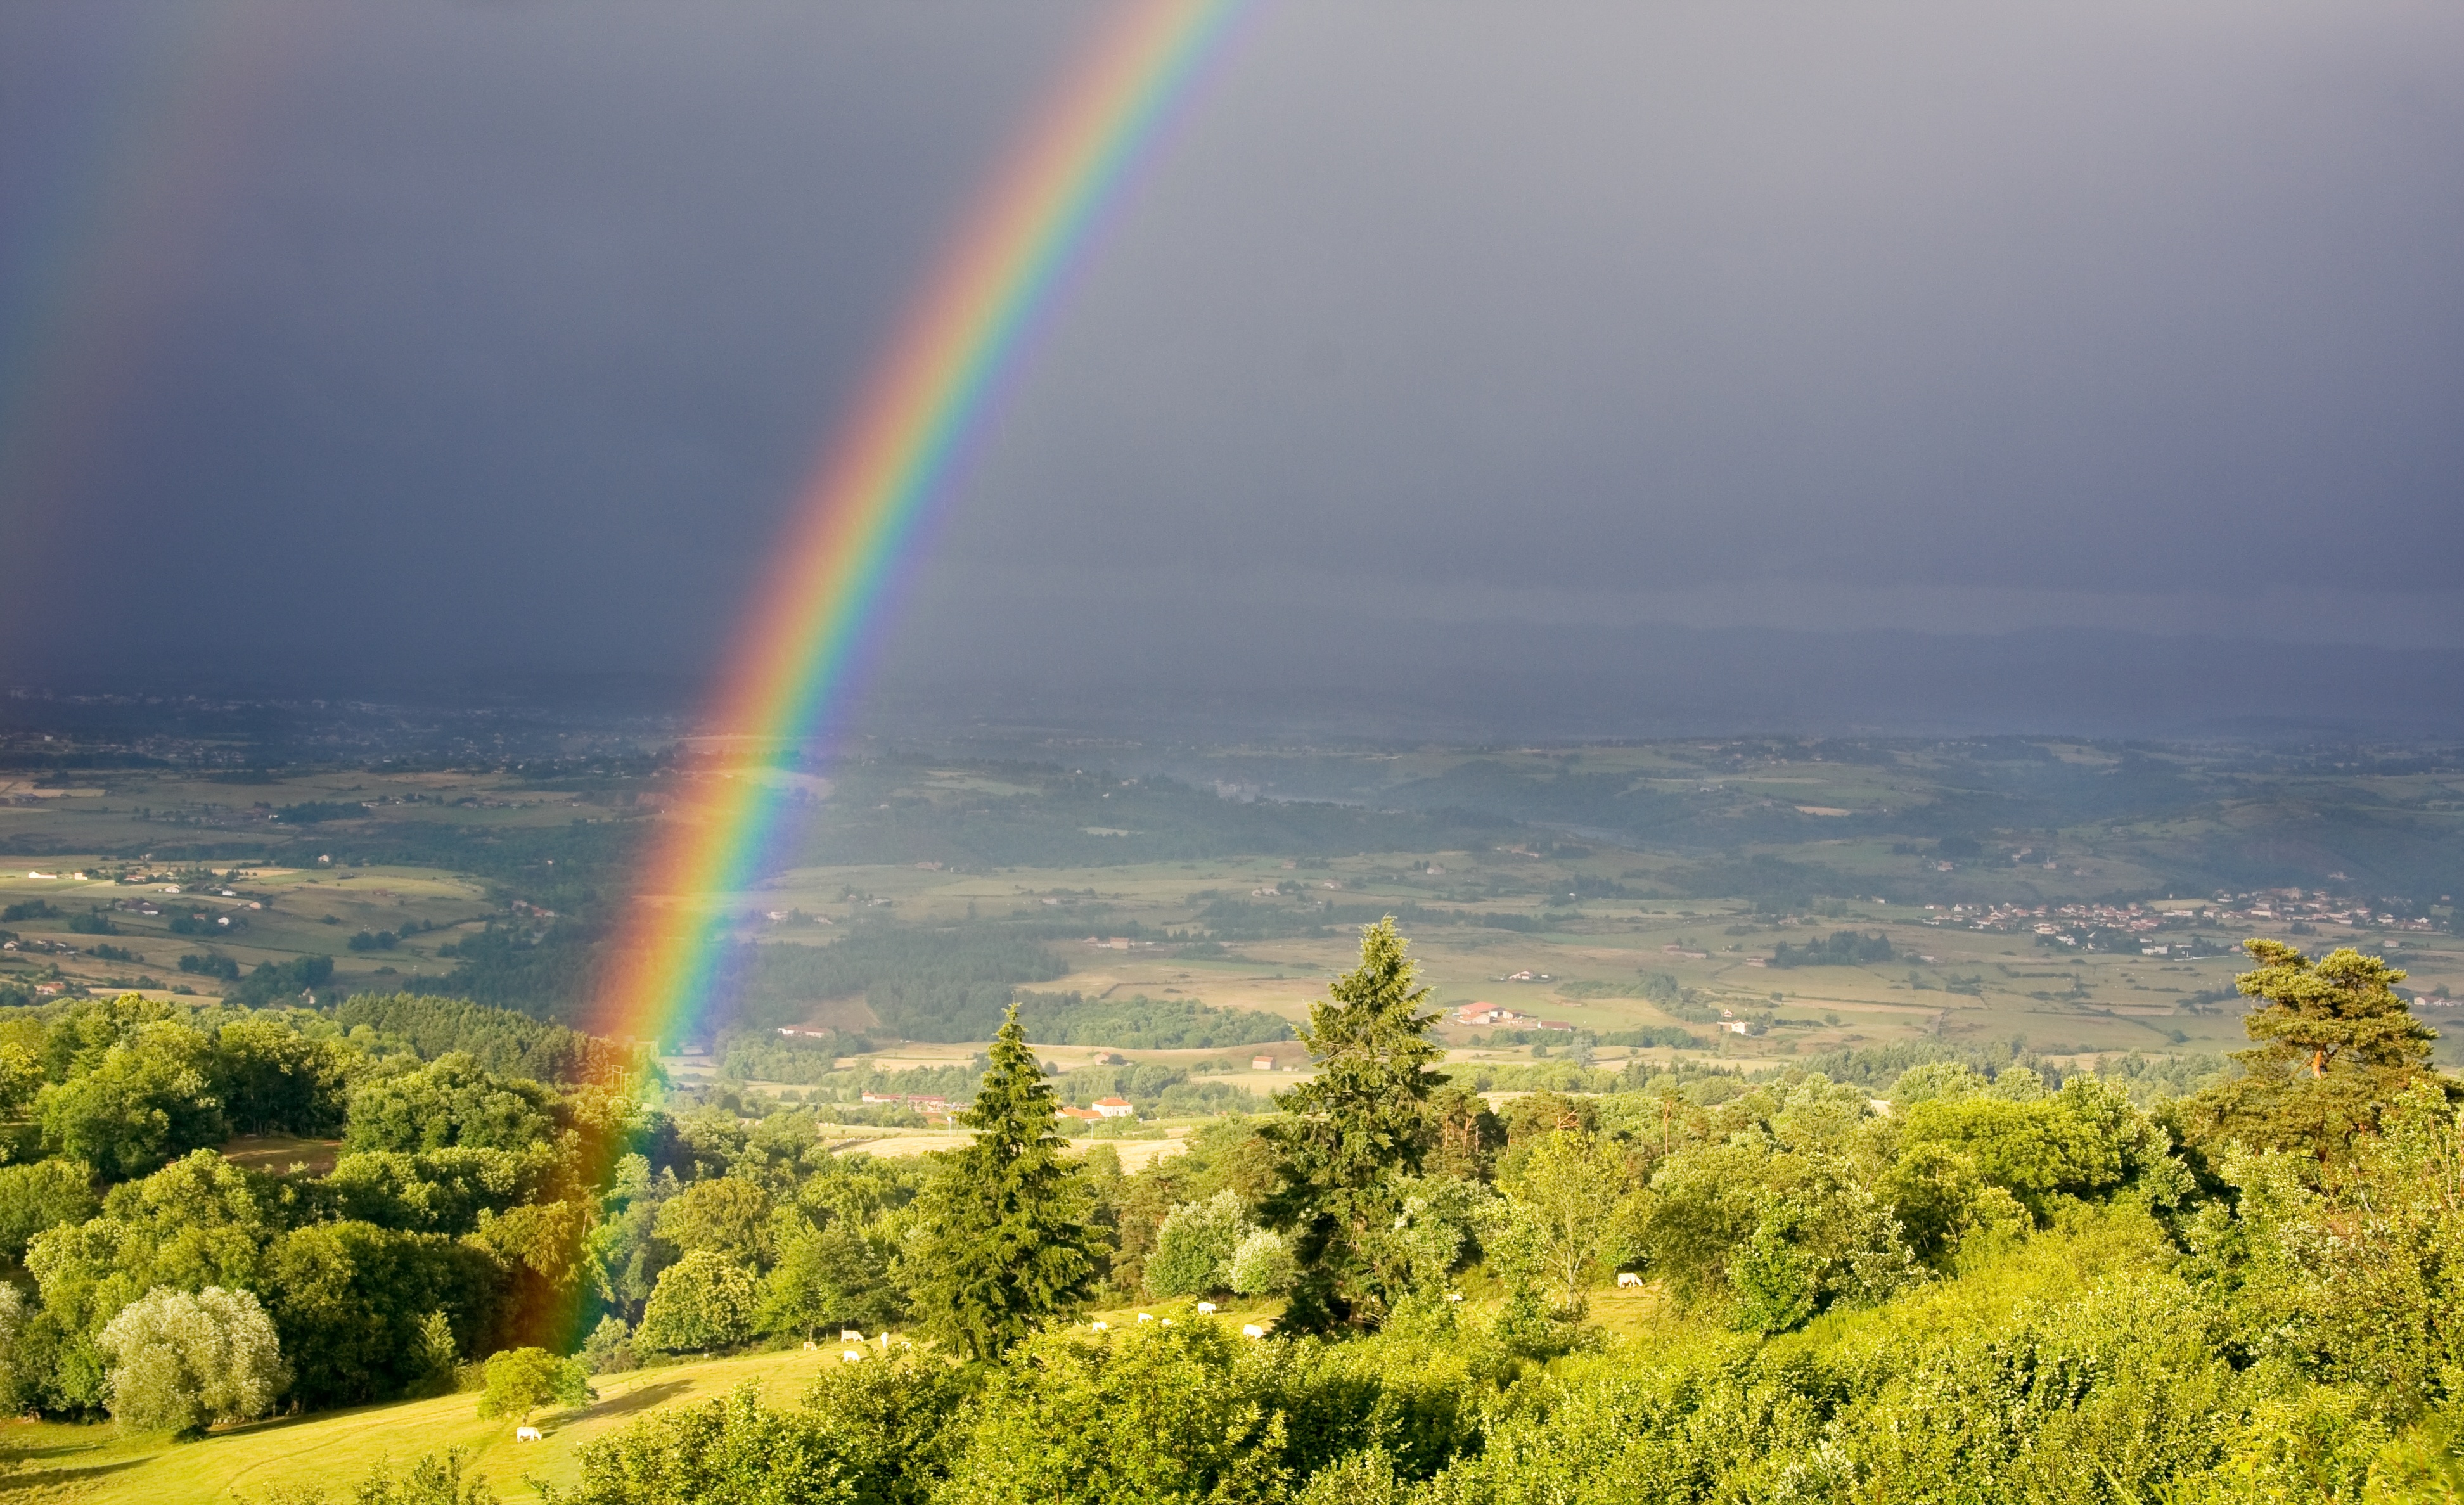 Rainbow over a vineyard illustrating terroir in wine